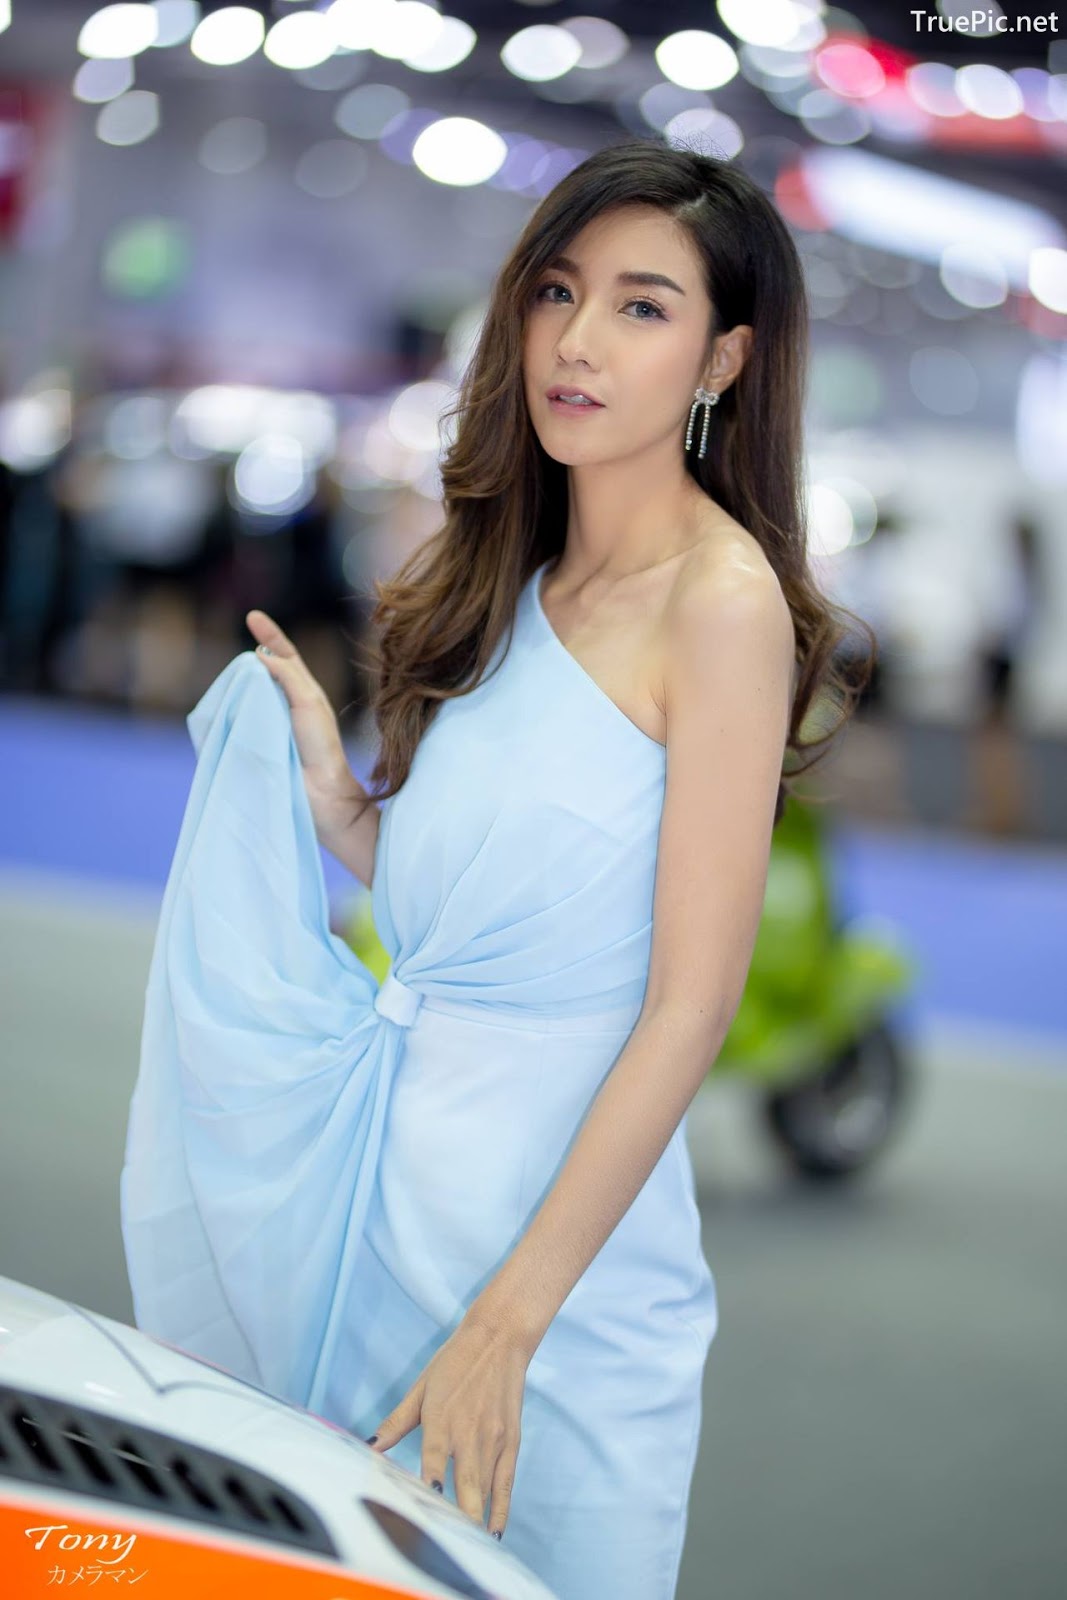 Image-Thailand-Hot-Model-Thai-Racing-Girl-At-Big-Motor-2018-TruePic.net- Picture-74